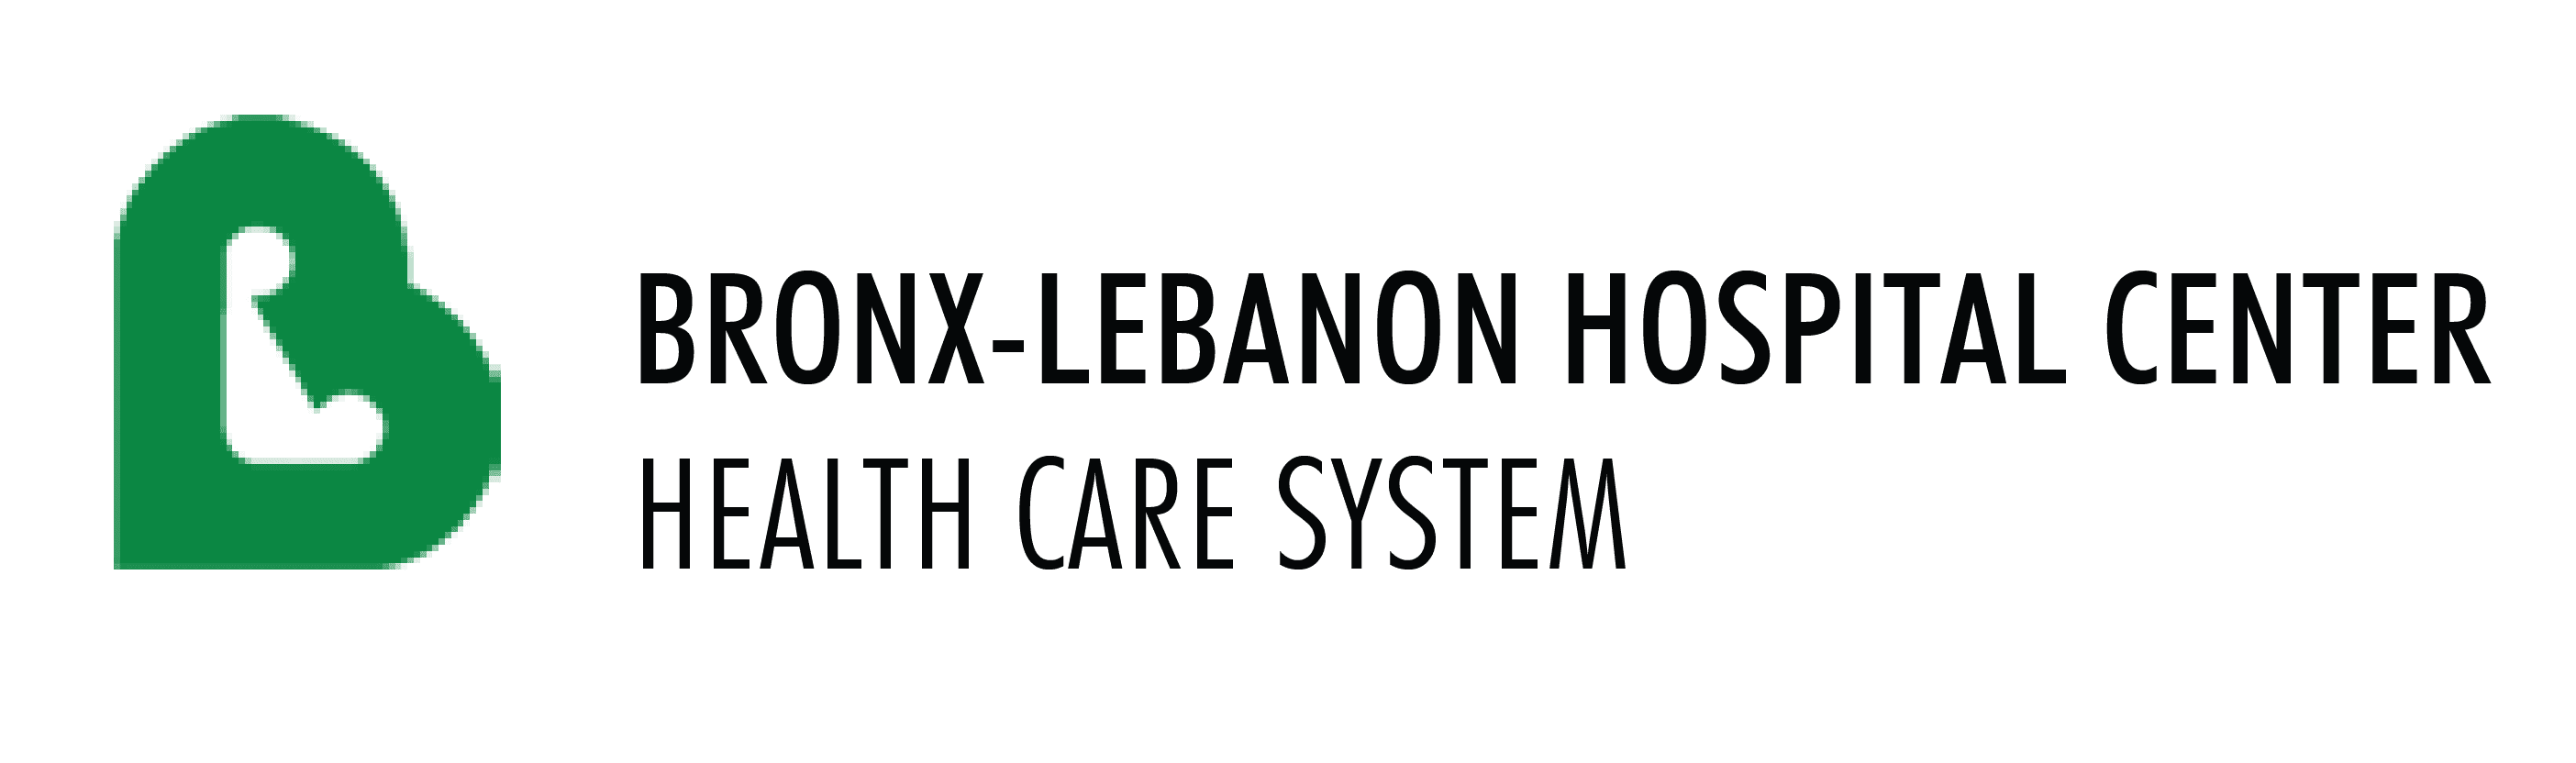 bronx lebanon